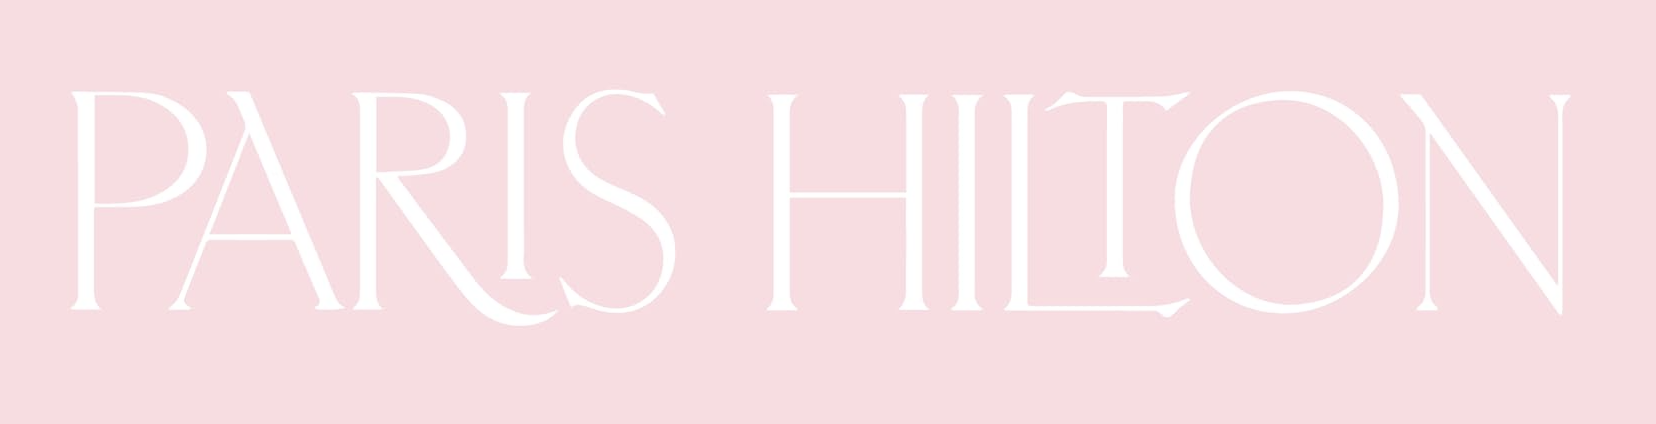 Paris hilton logo